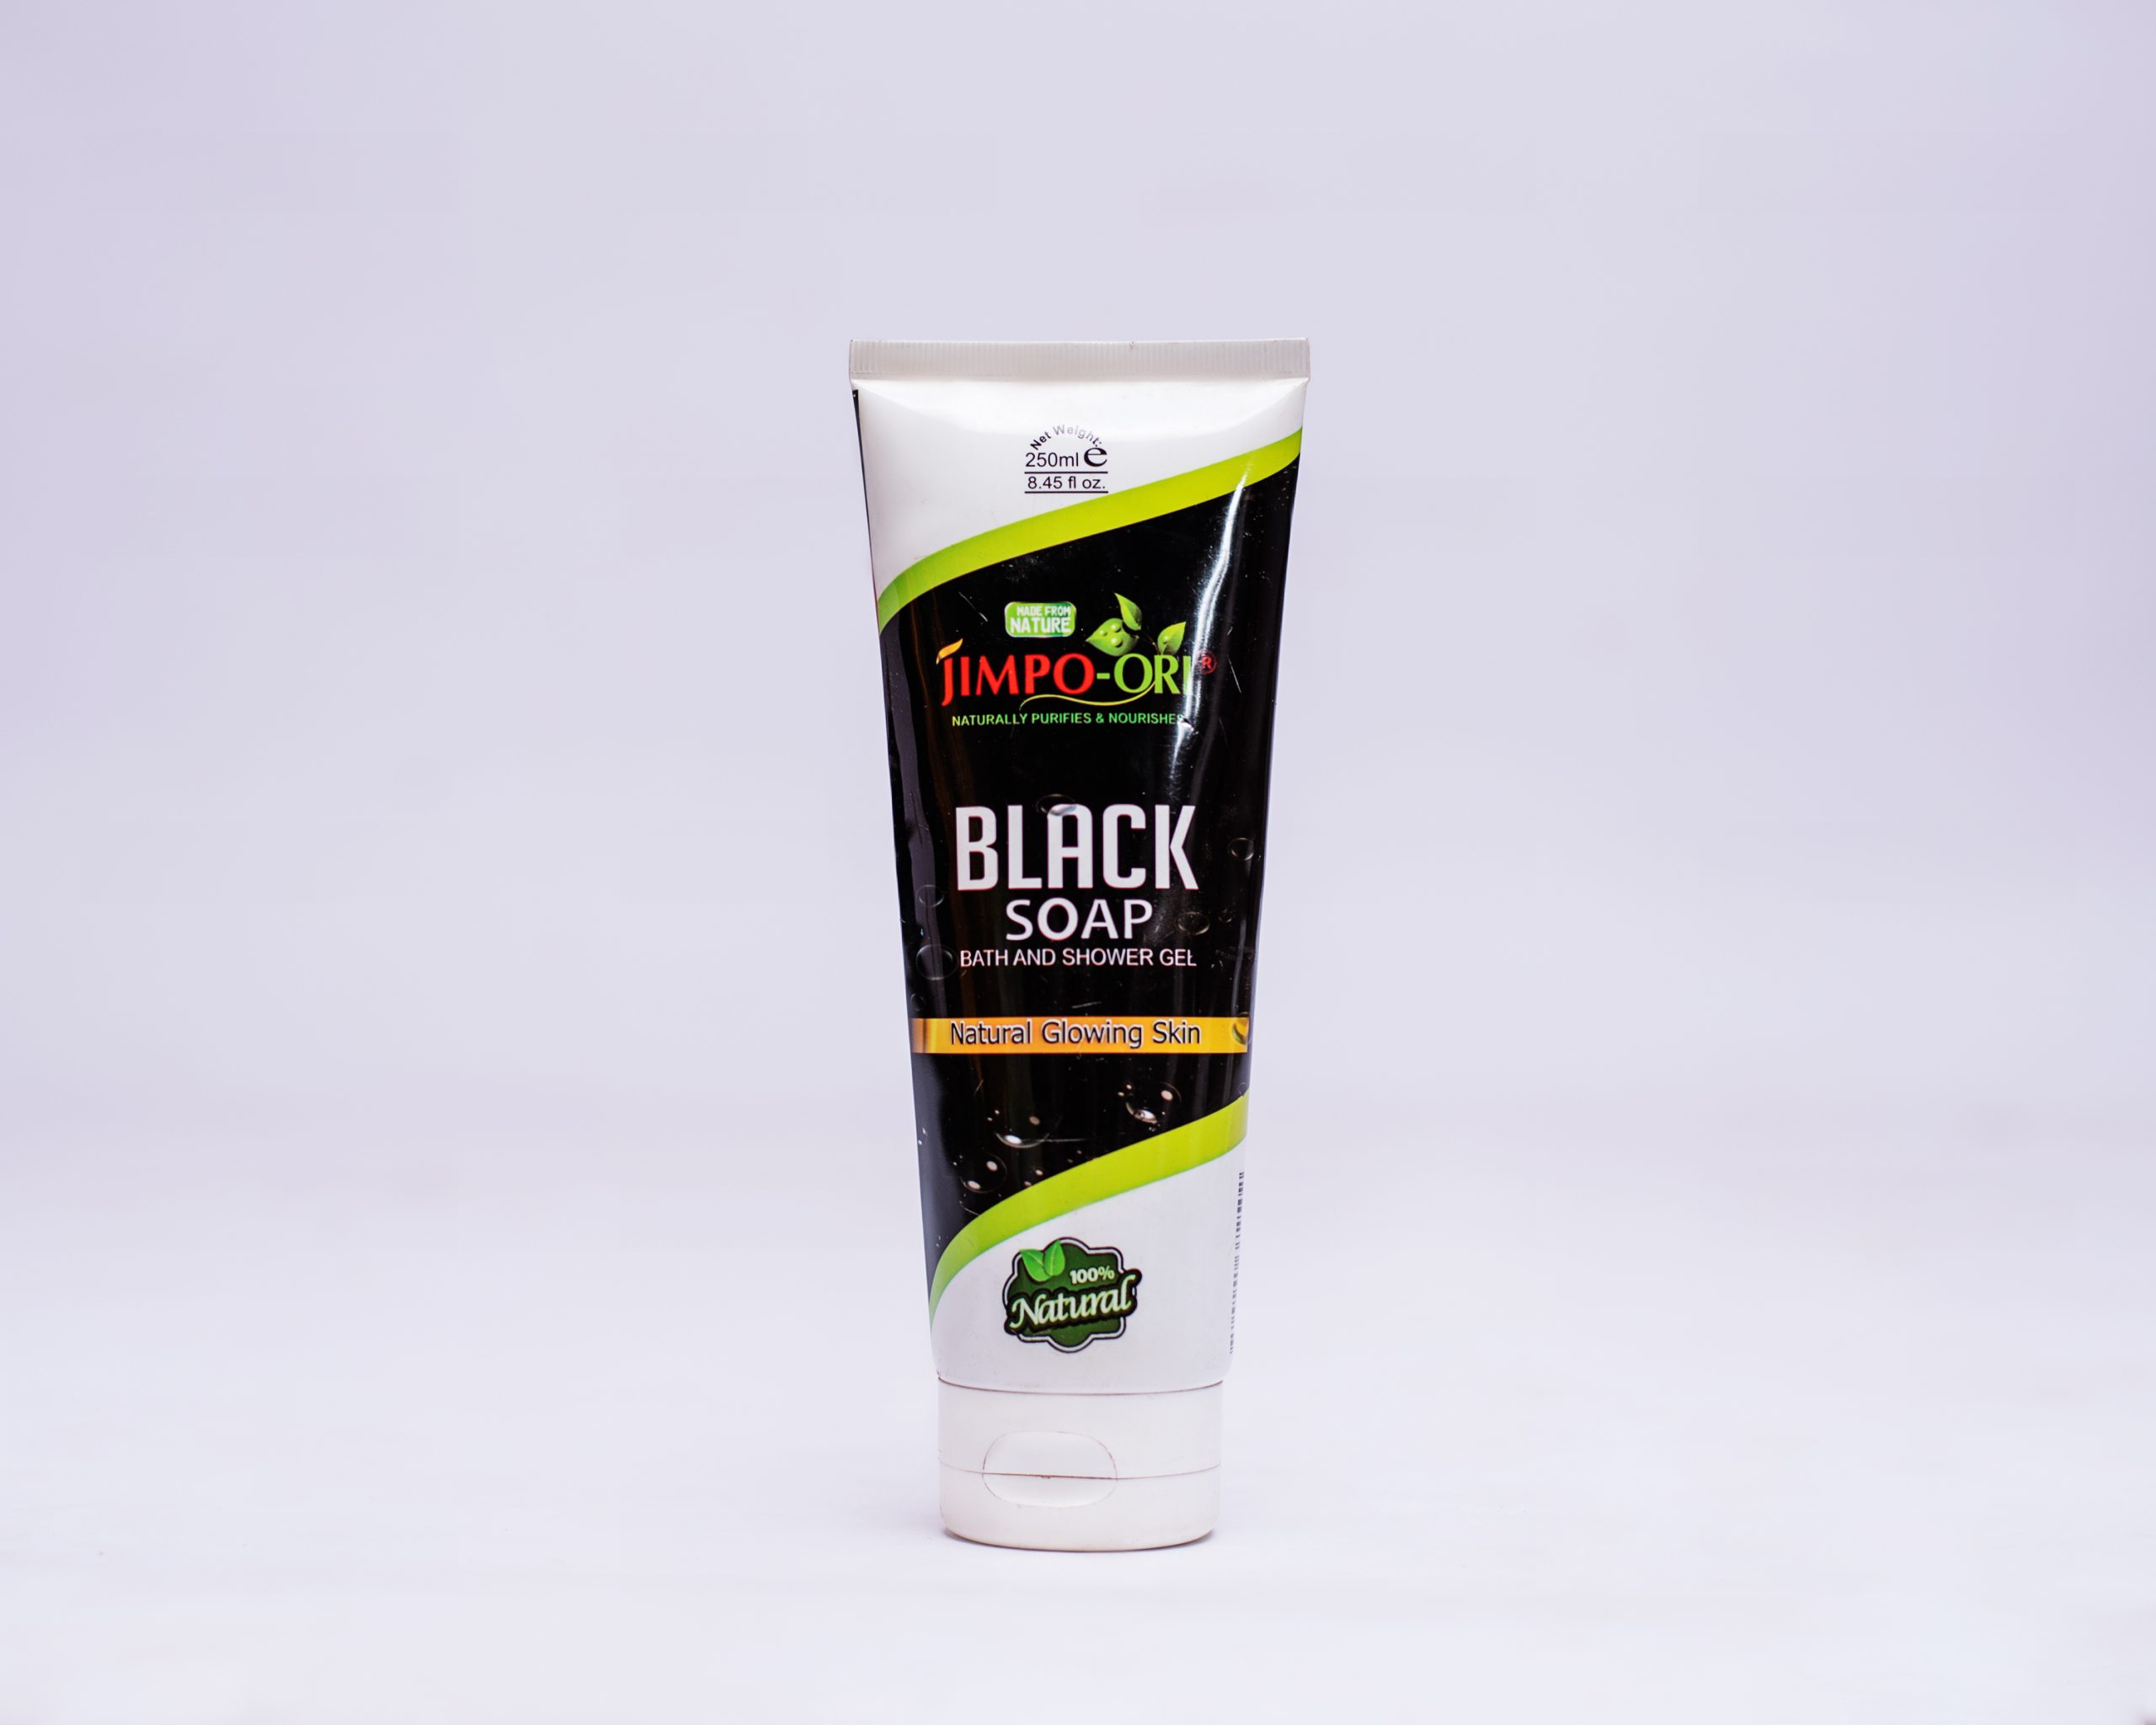 Jimpo-Ori Black Soap Shower Gel